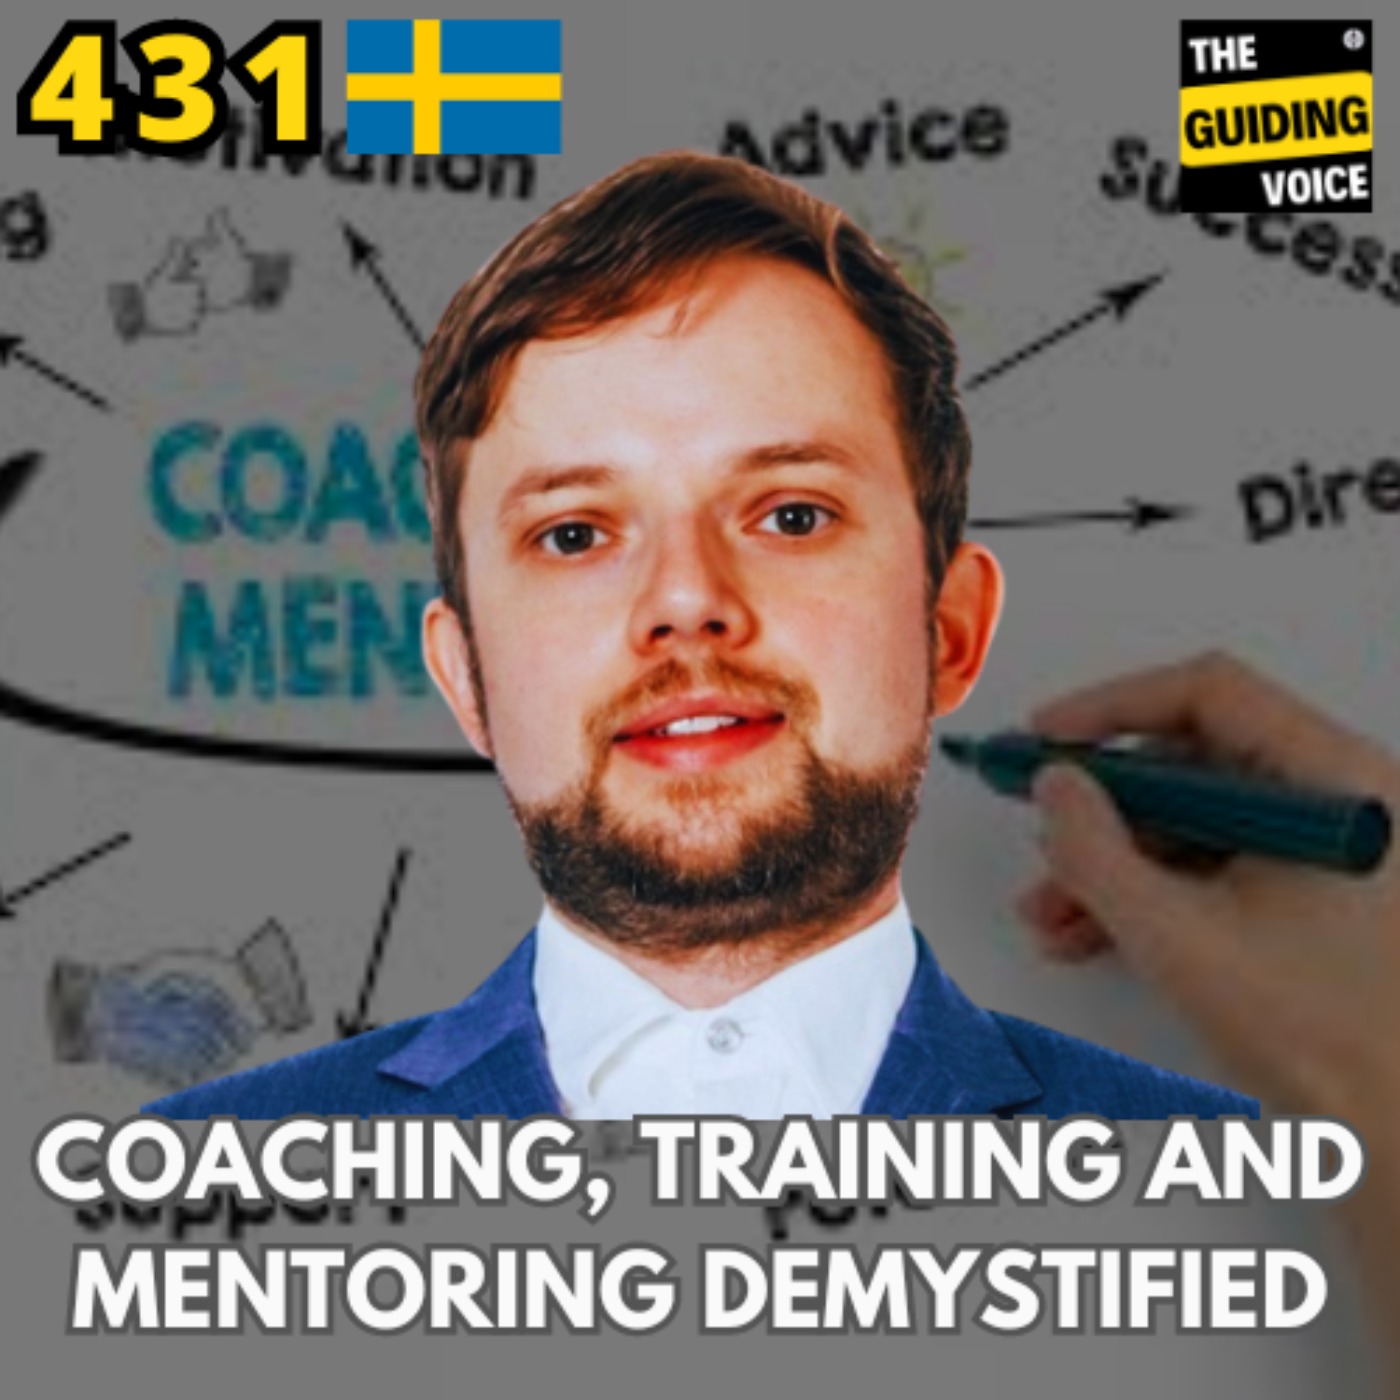 Masters of Growth: Coaching, Mentoring, Training Demystified | #TGVGLOBALSPEAKERFESTIVAL | Ondrej Papanek | #TGV431